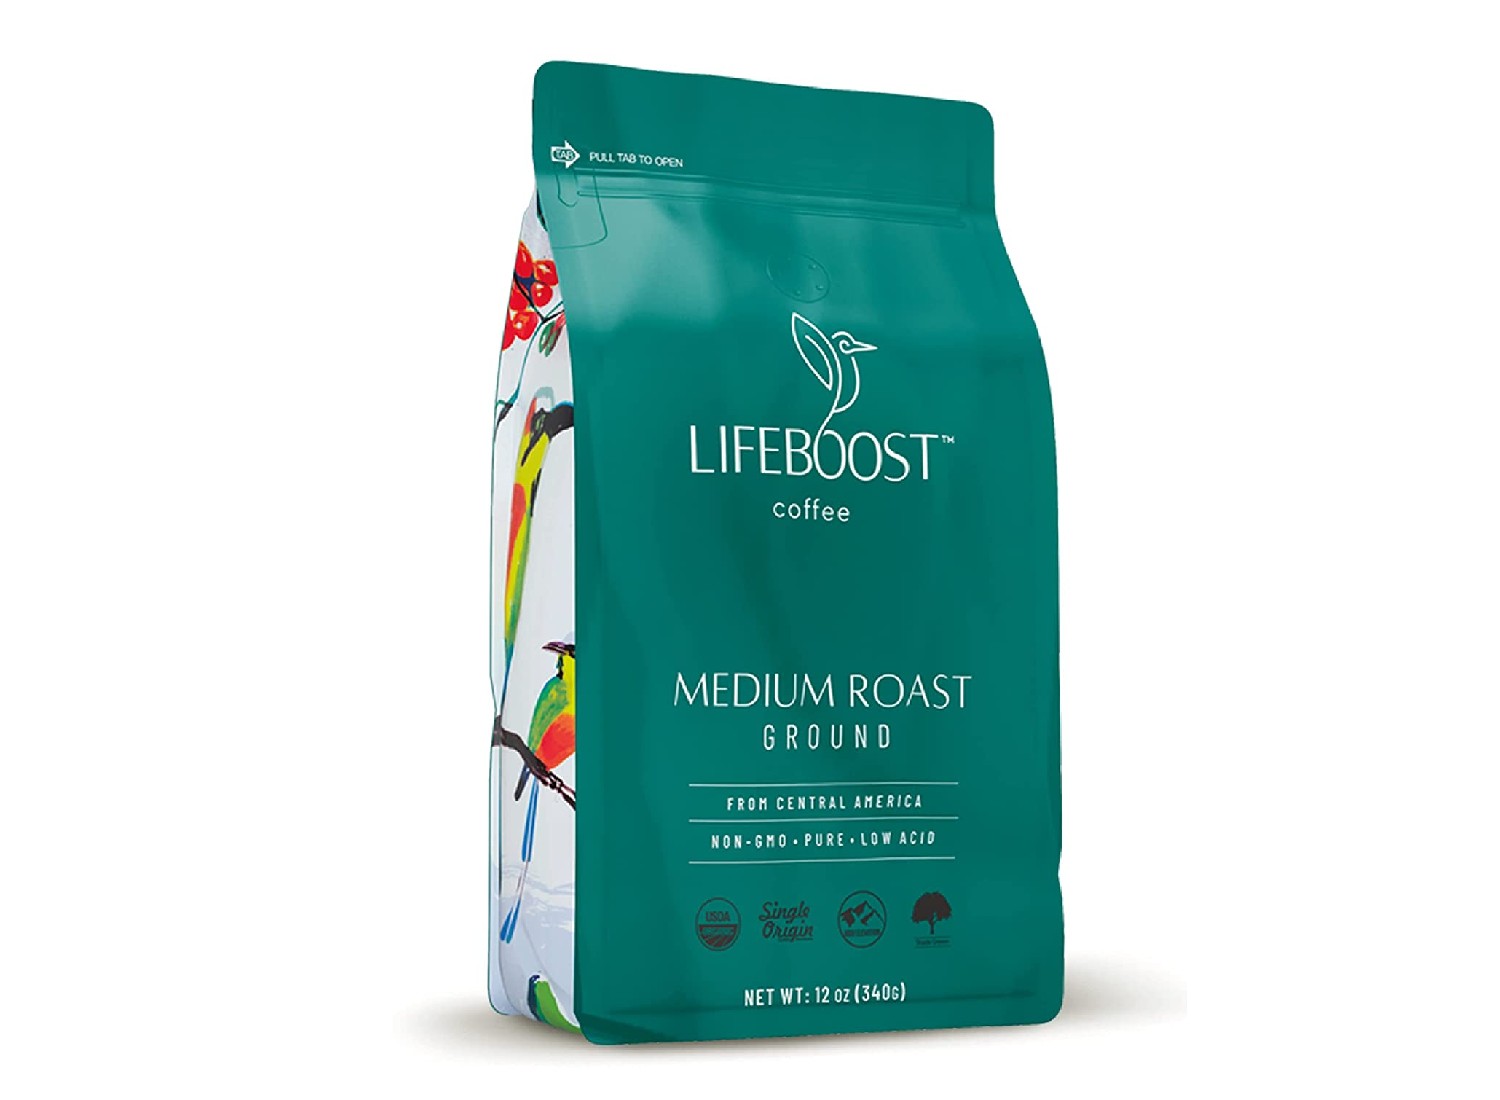 LIFEBOOST Coffee Medium Roast Ground sold on Amazon